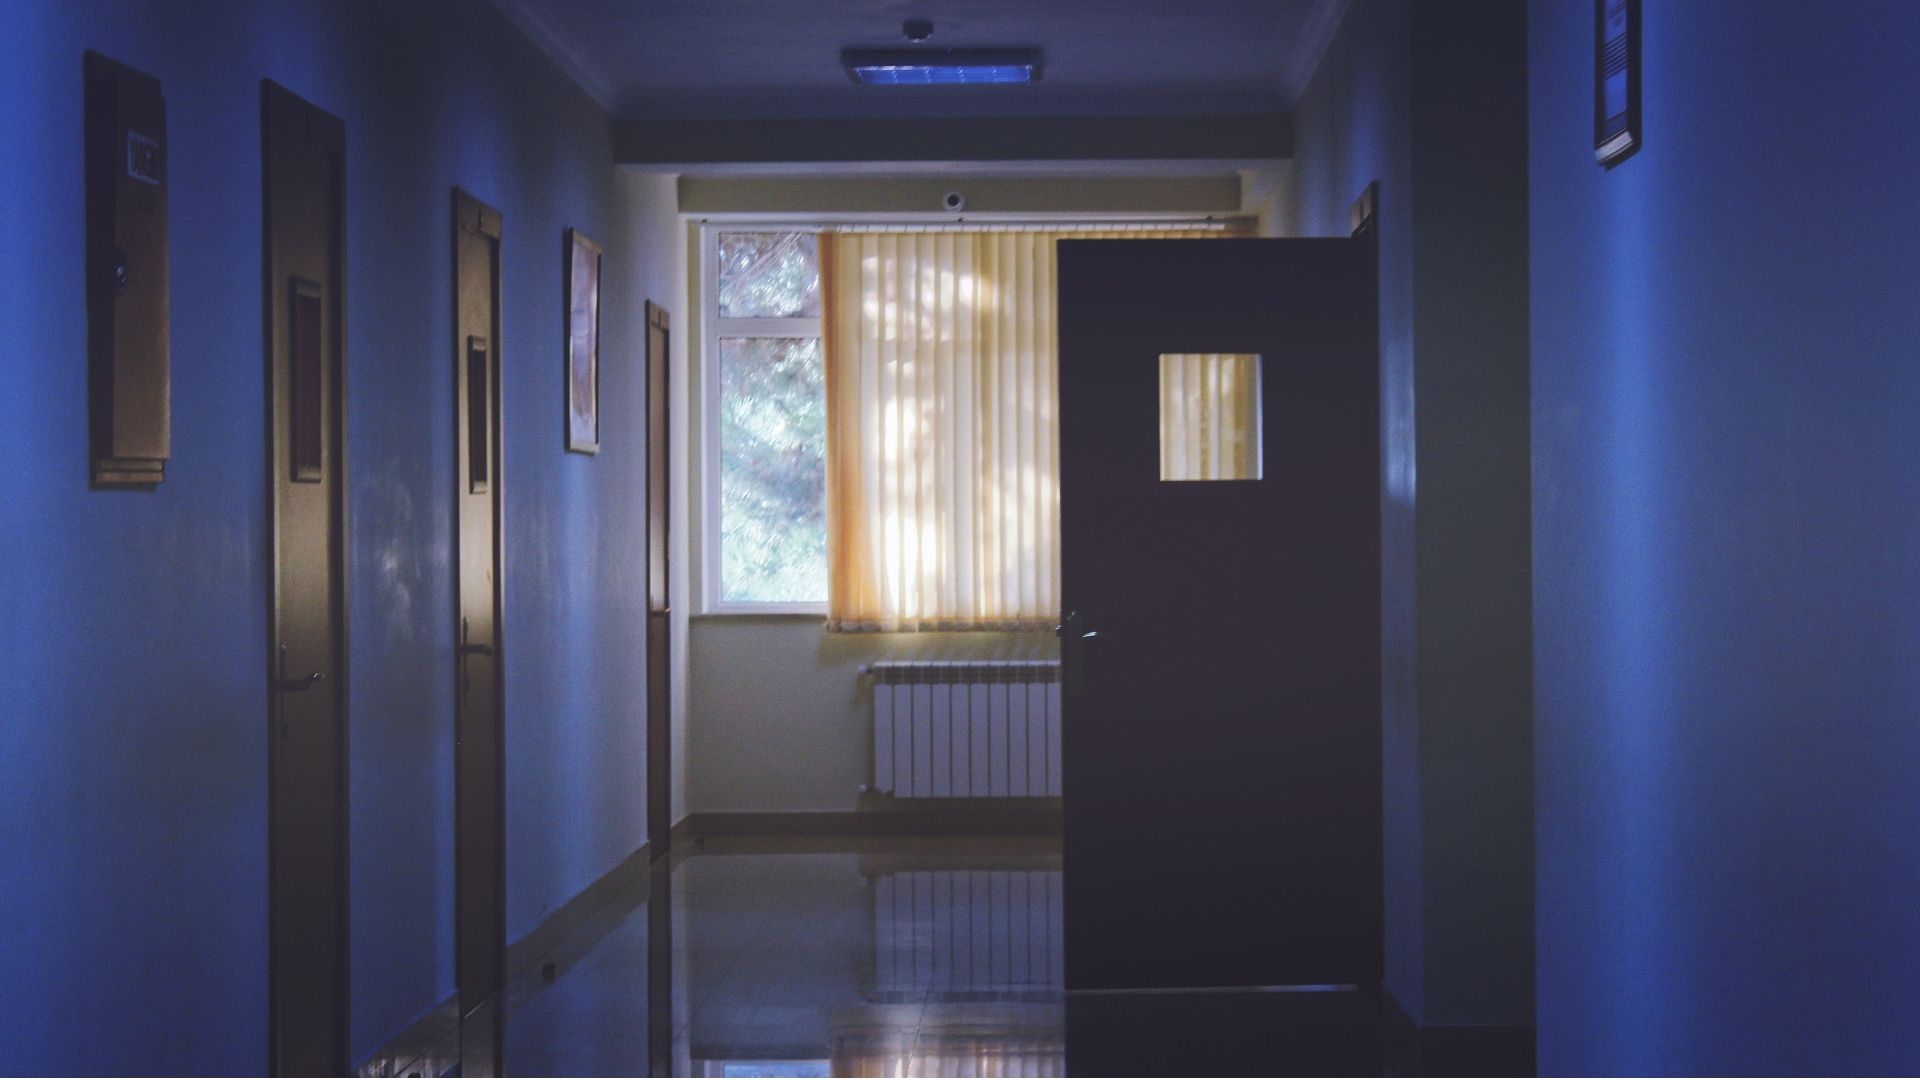 A darkened hospital corridor